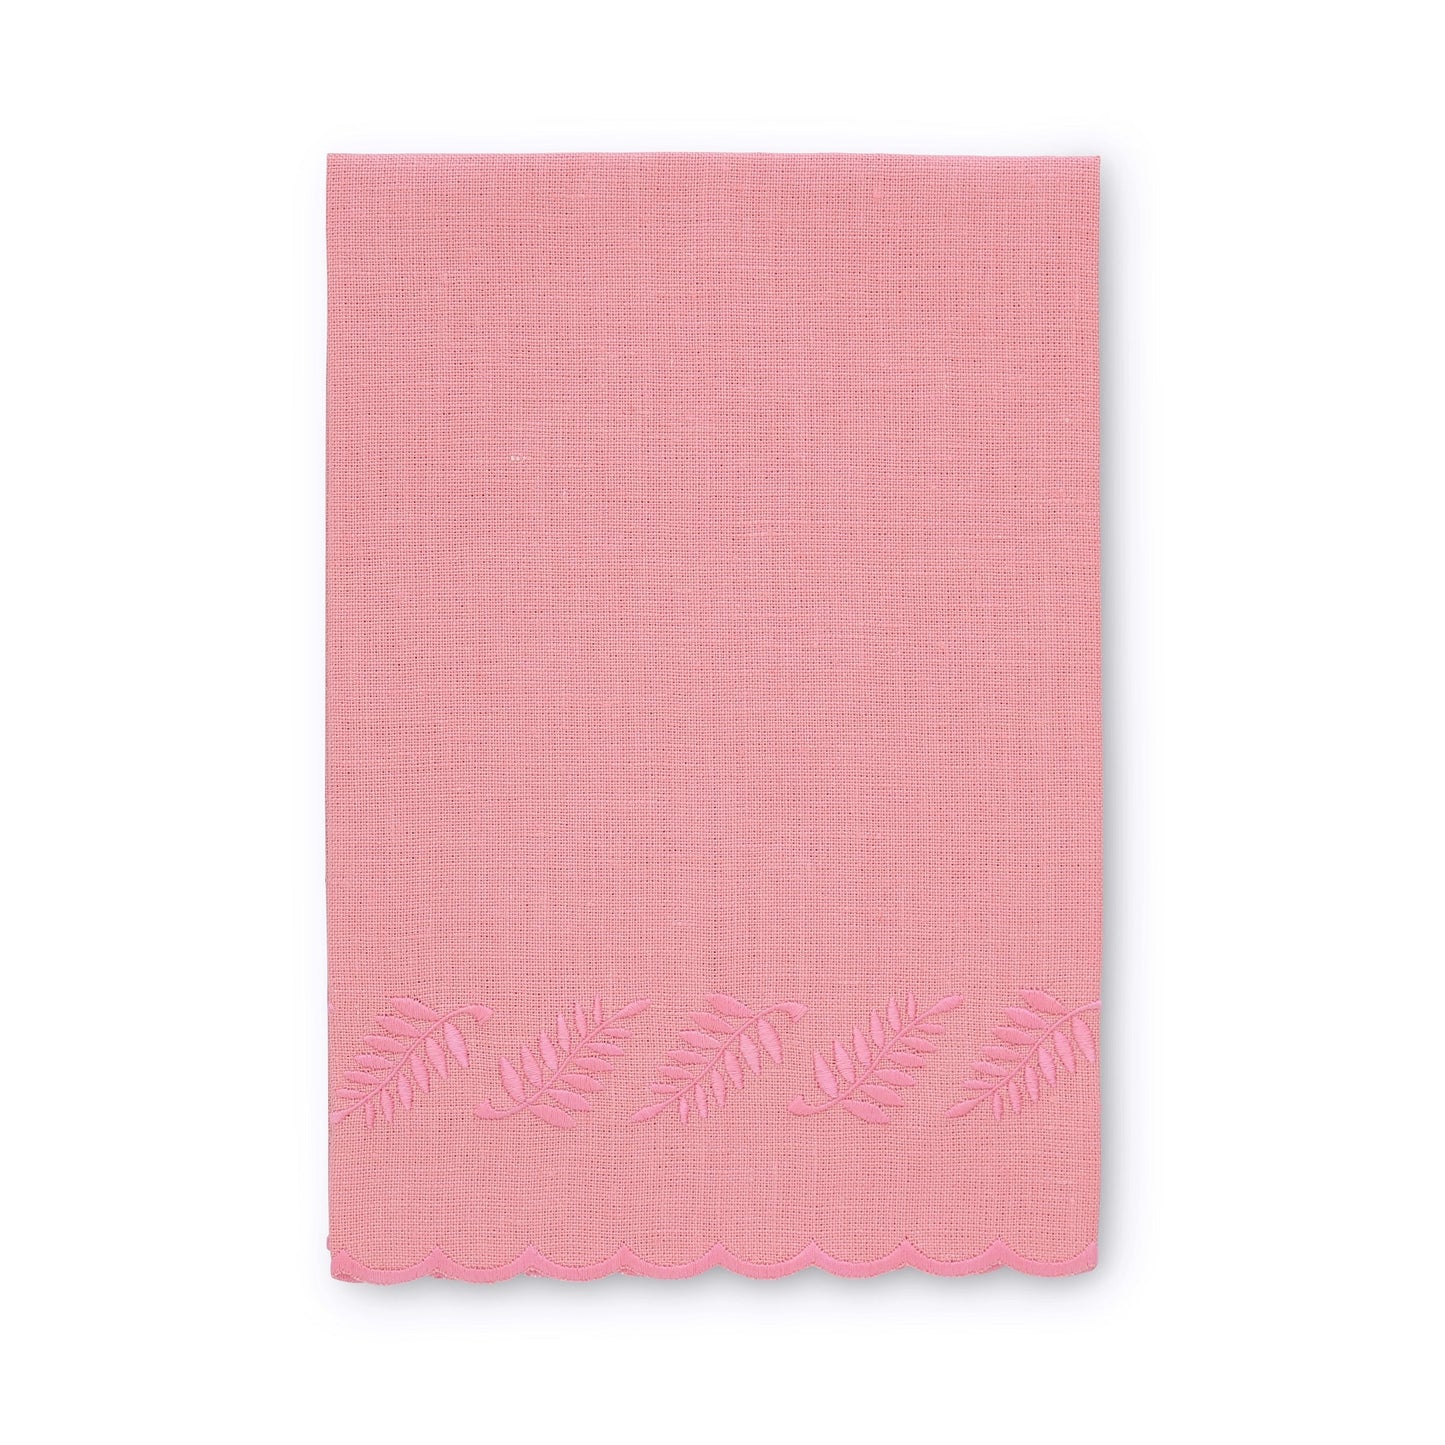 Salmon / Pink Fern Scalloped Linen Guest Towel (each)